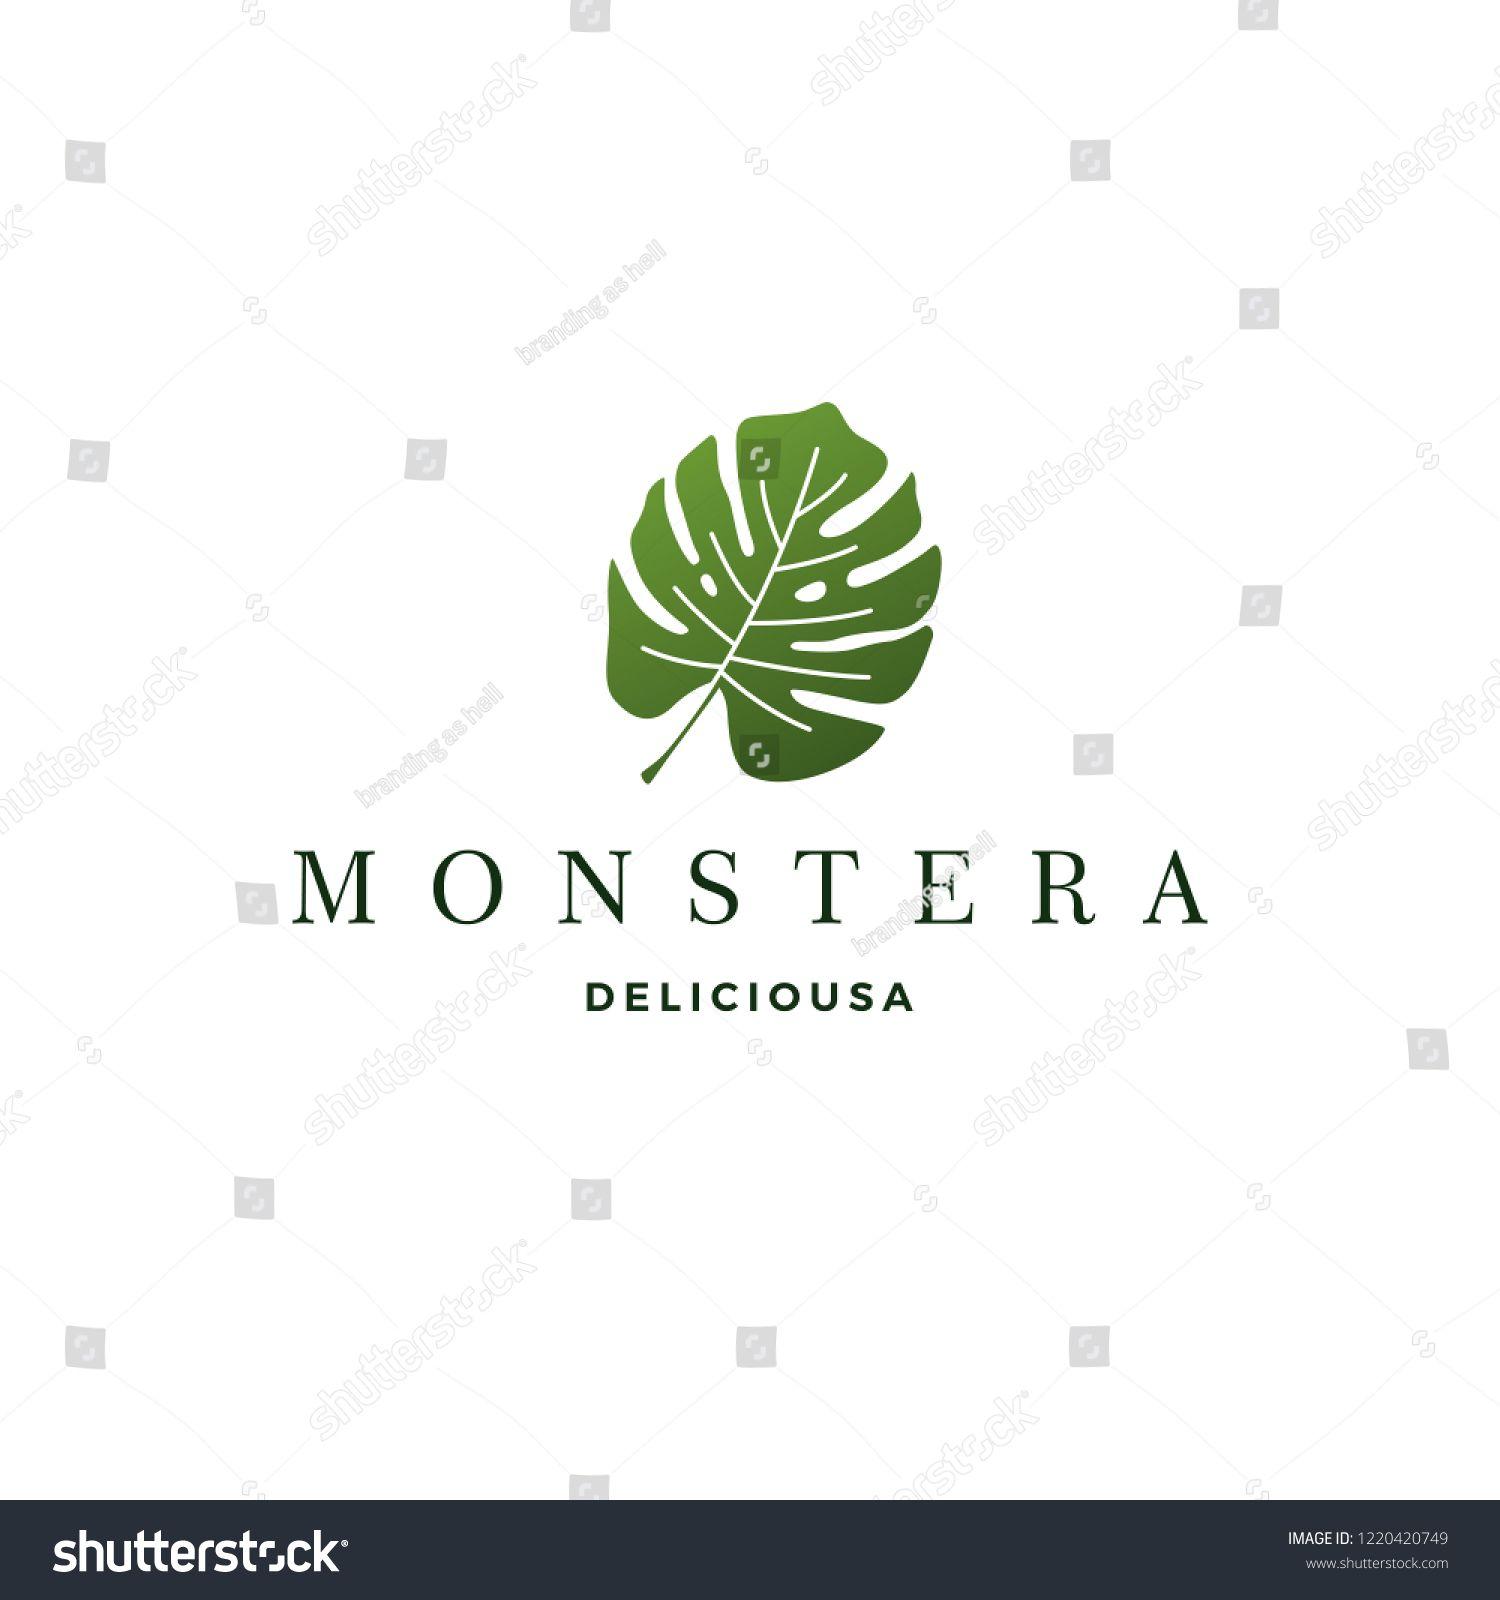 Palm Leaf Logo - monstera deliciosa deliciousa leaf logo vector icon illustration ...